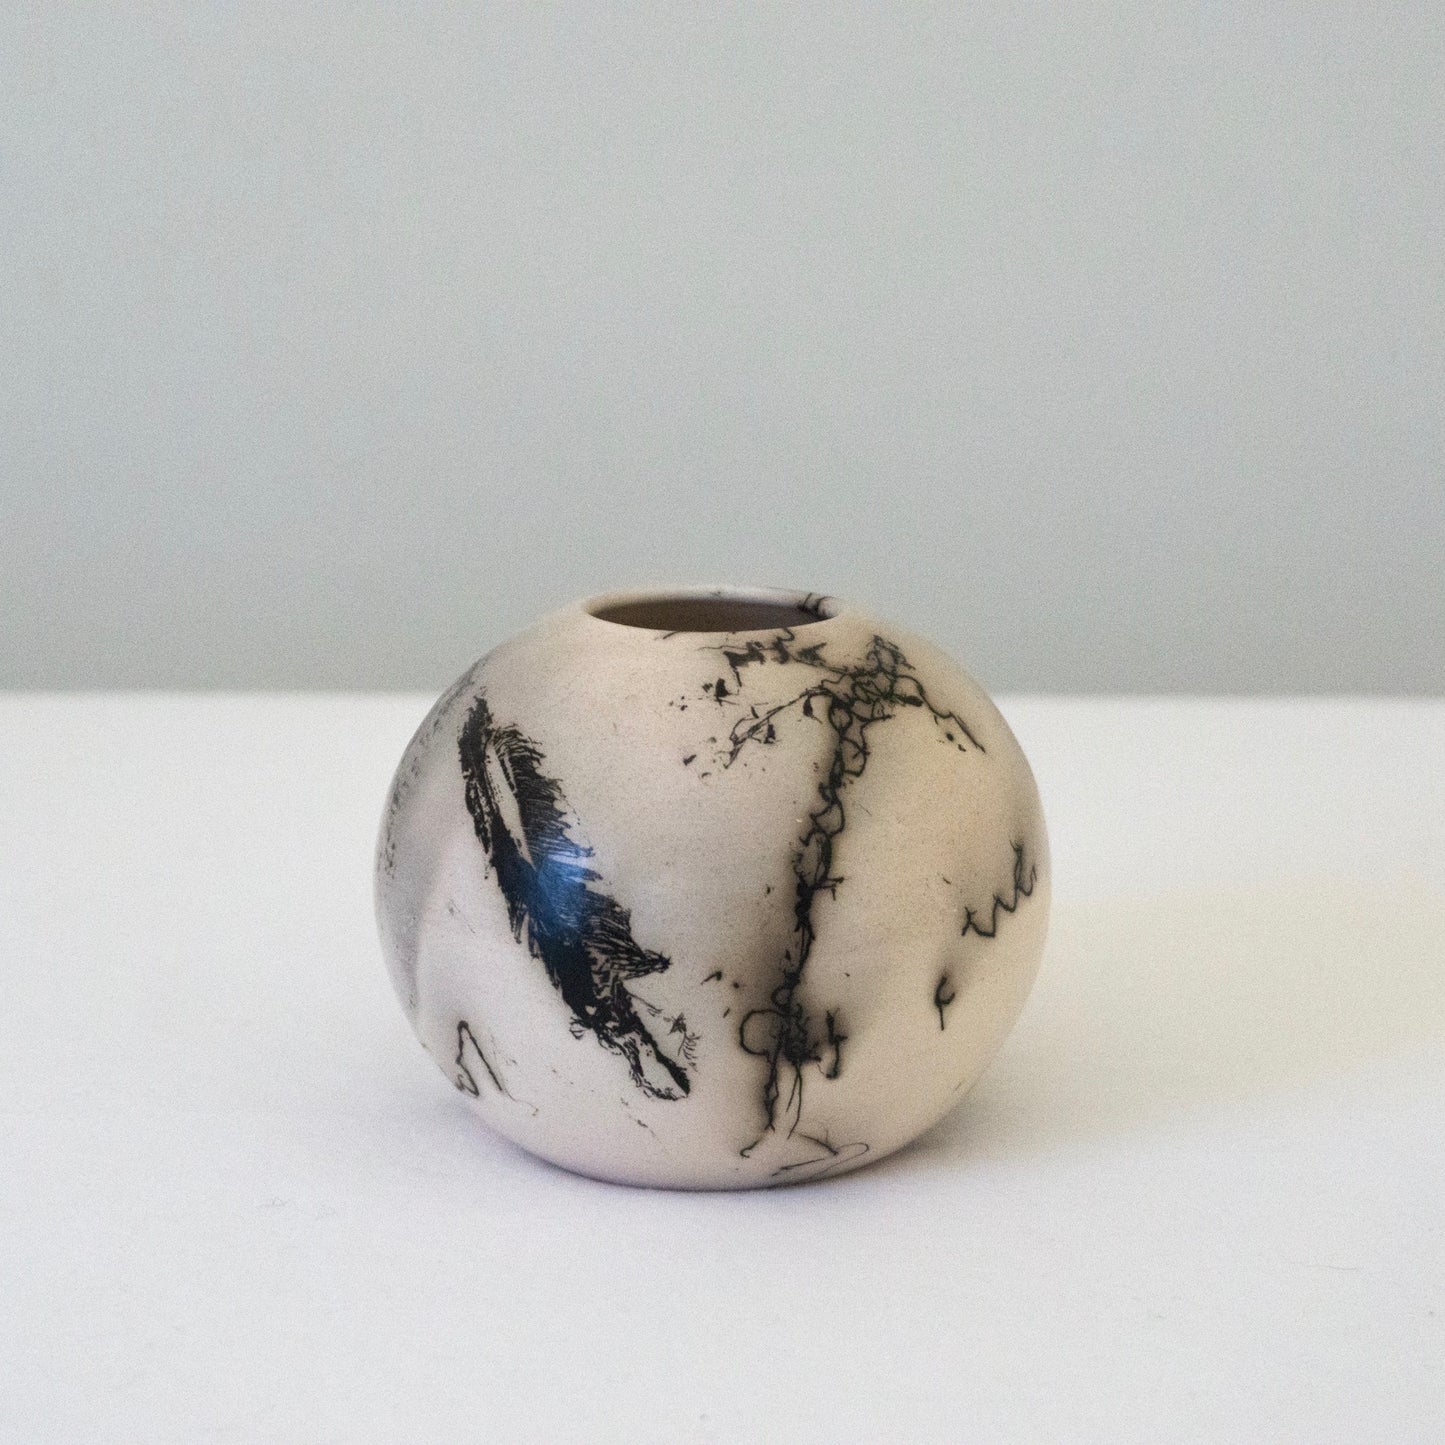 Small sized Raku Vase by Grace Cain